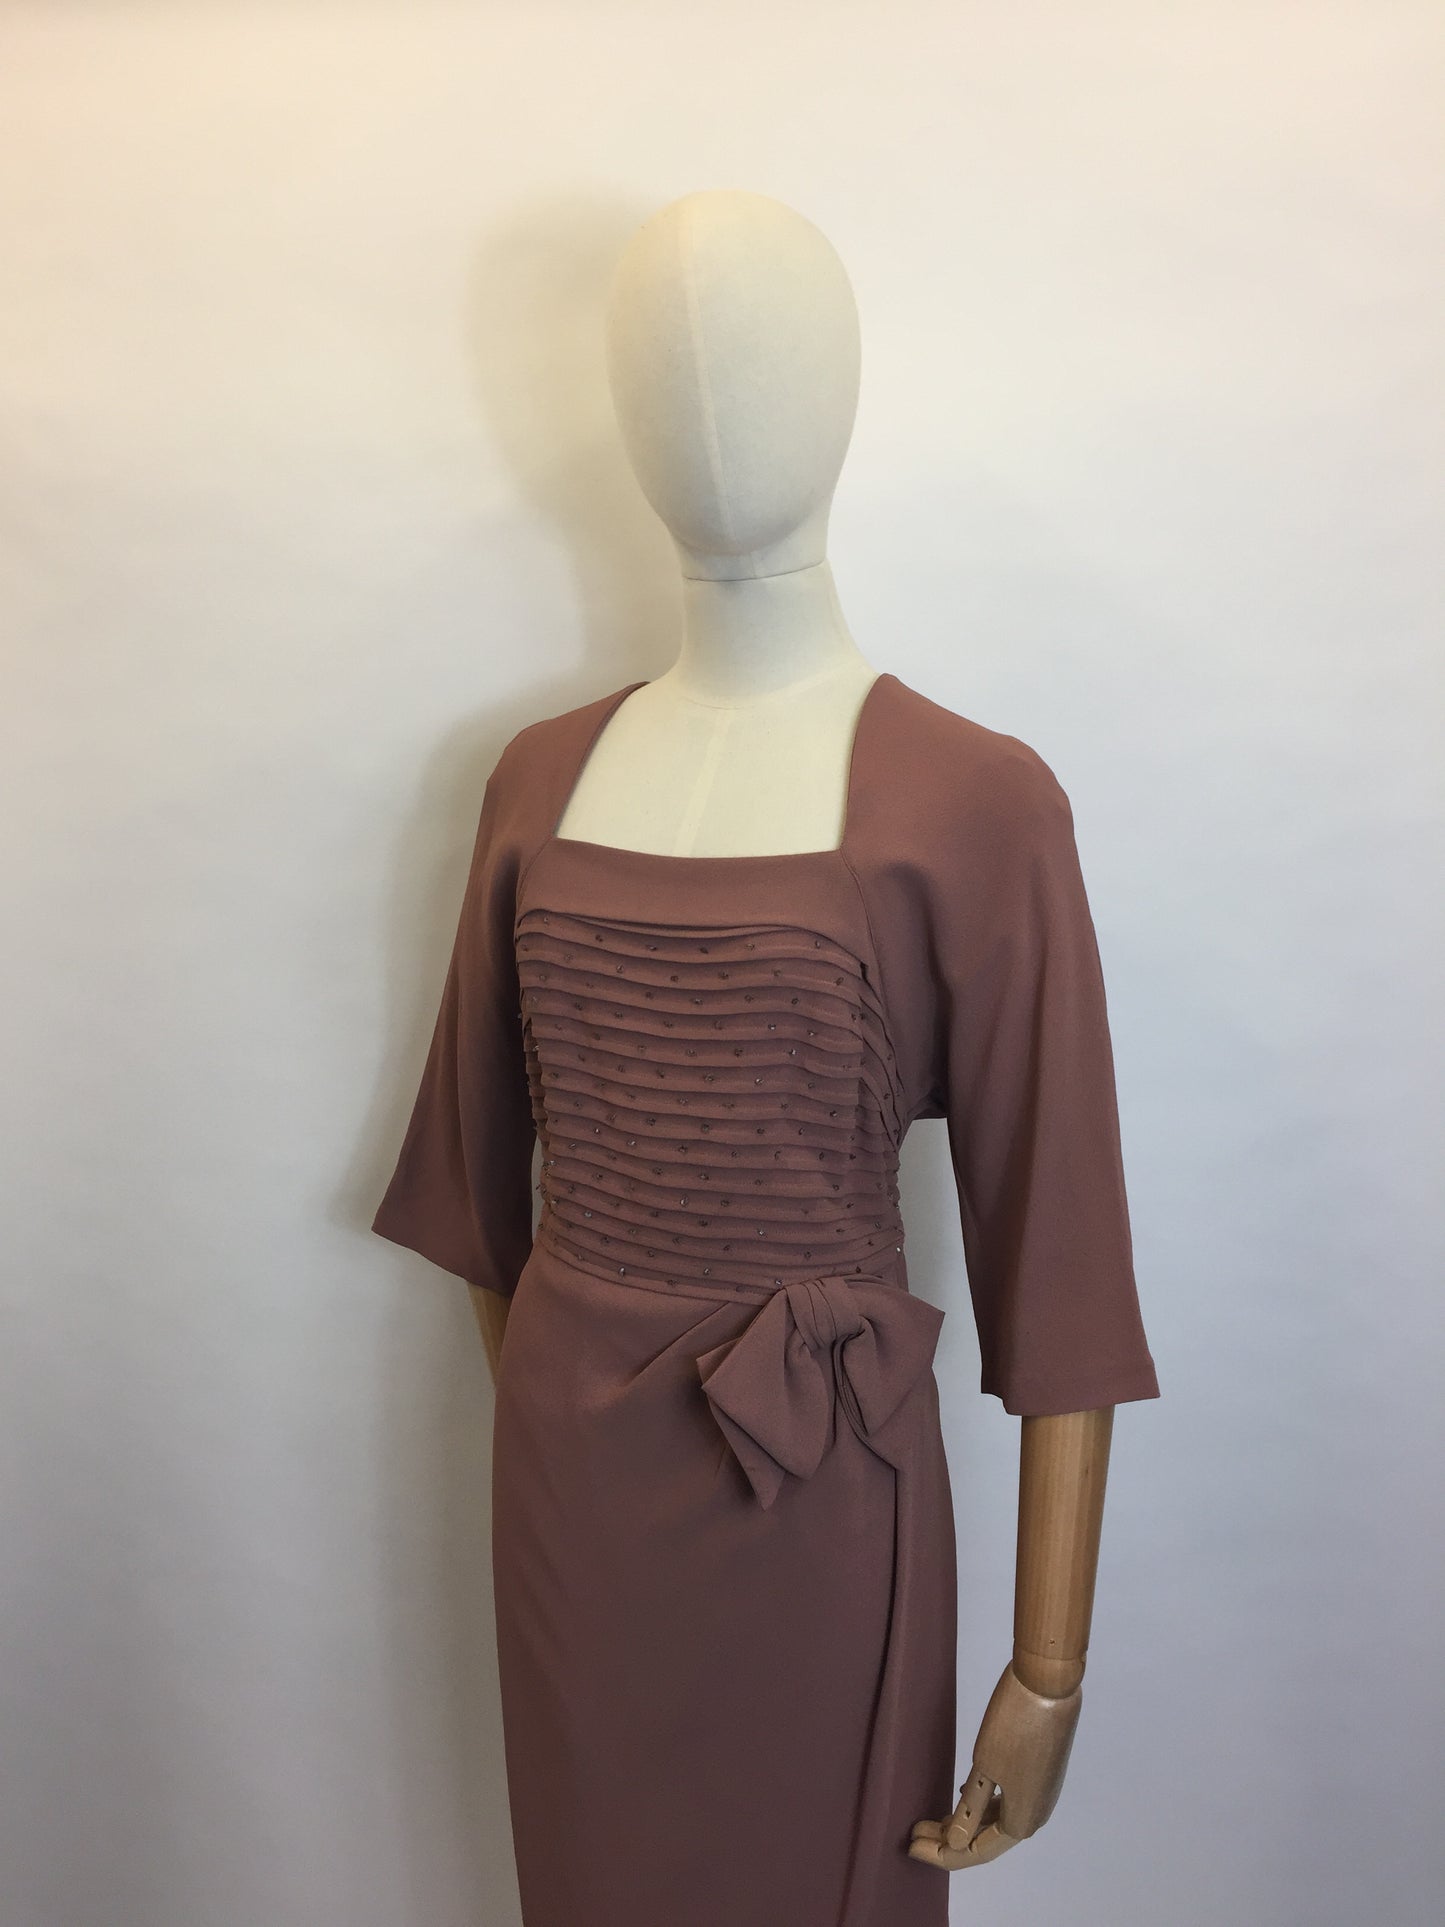 Original 1940s Formal Crepe Dress - Beautiful Waist Bow & skirt overlay shaping